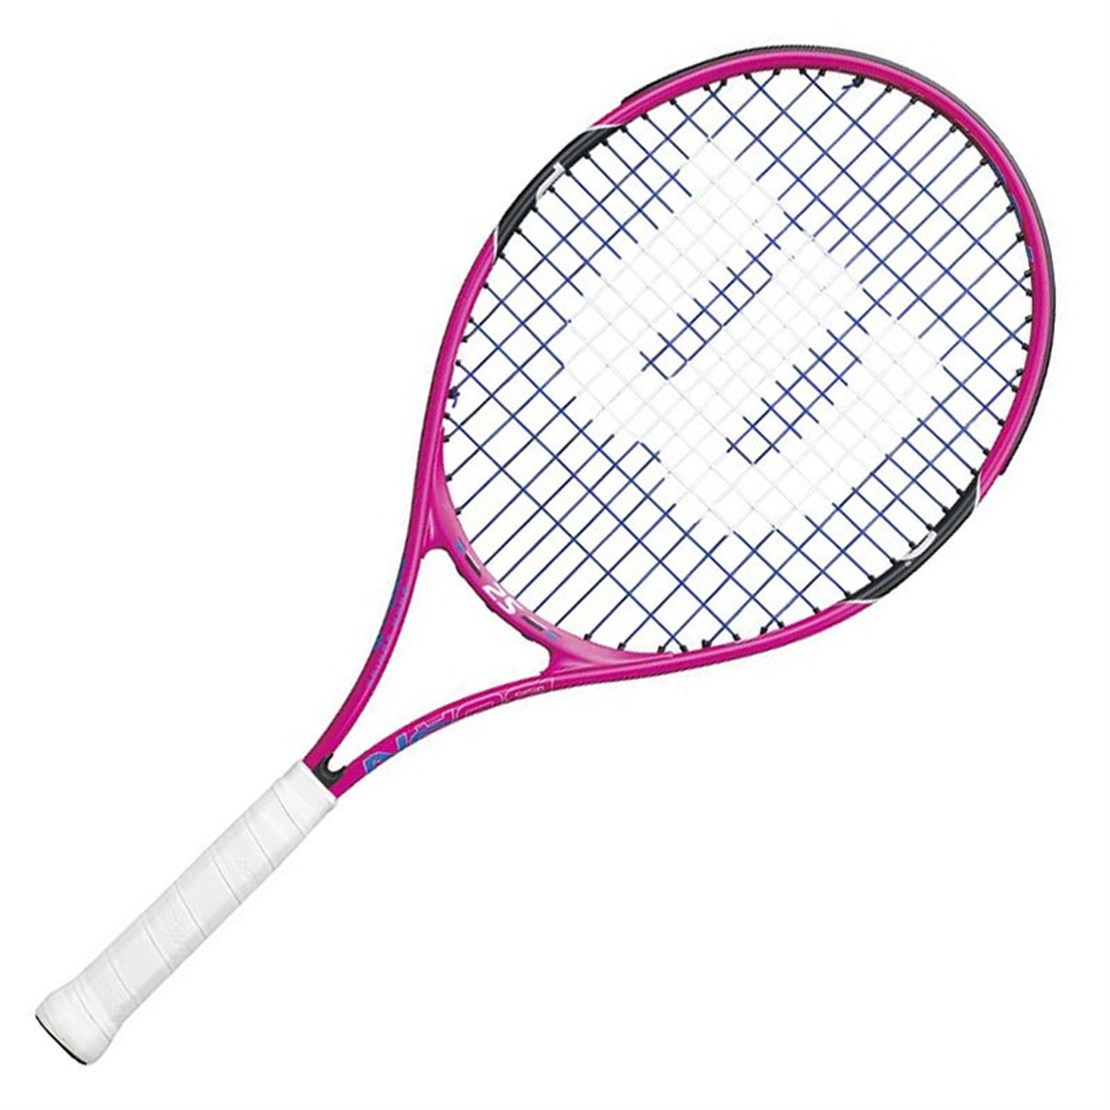 Wilson Burn Pink 25 Tenis Raketi | Merit Spor